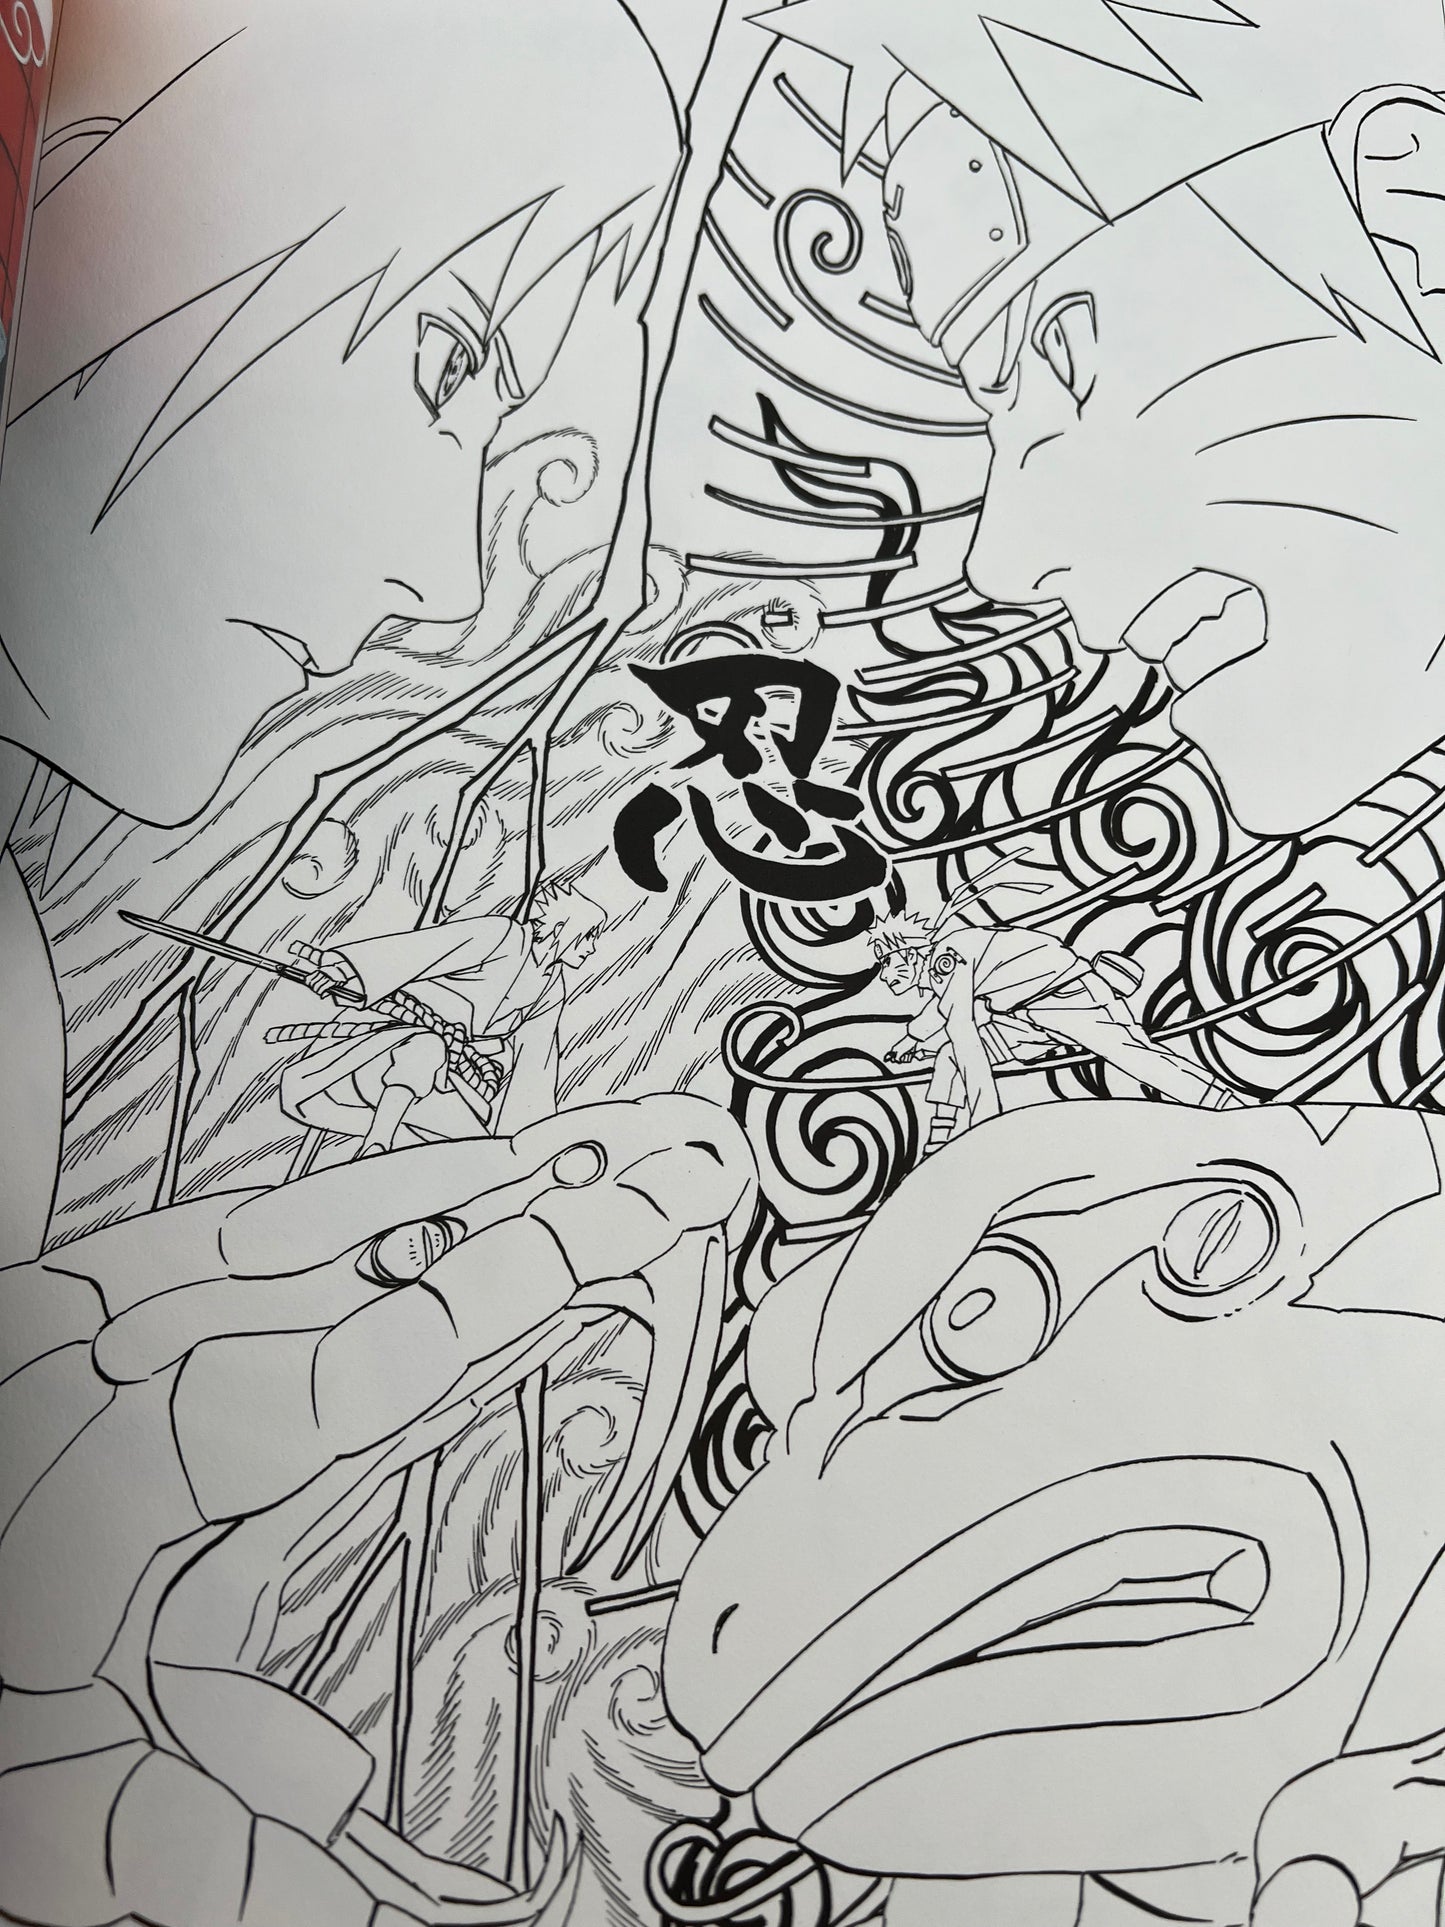 Naruto: Paint Jump Illustration Paint Book - OOP Japan